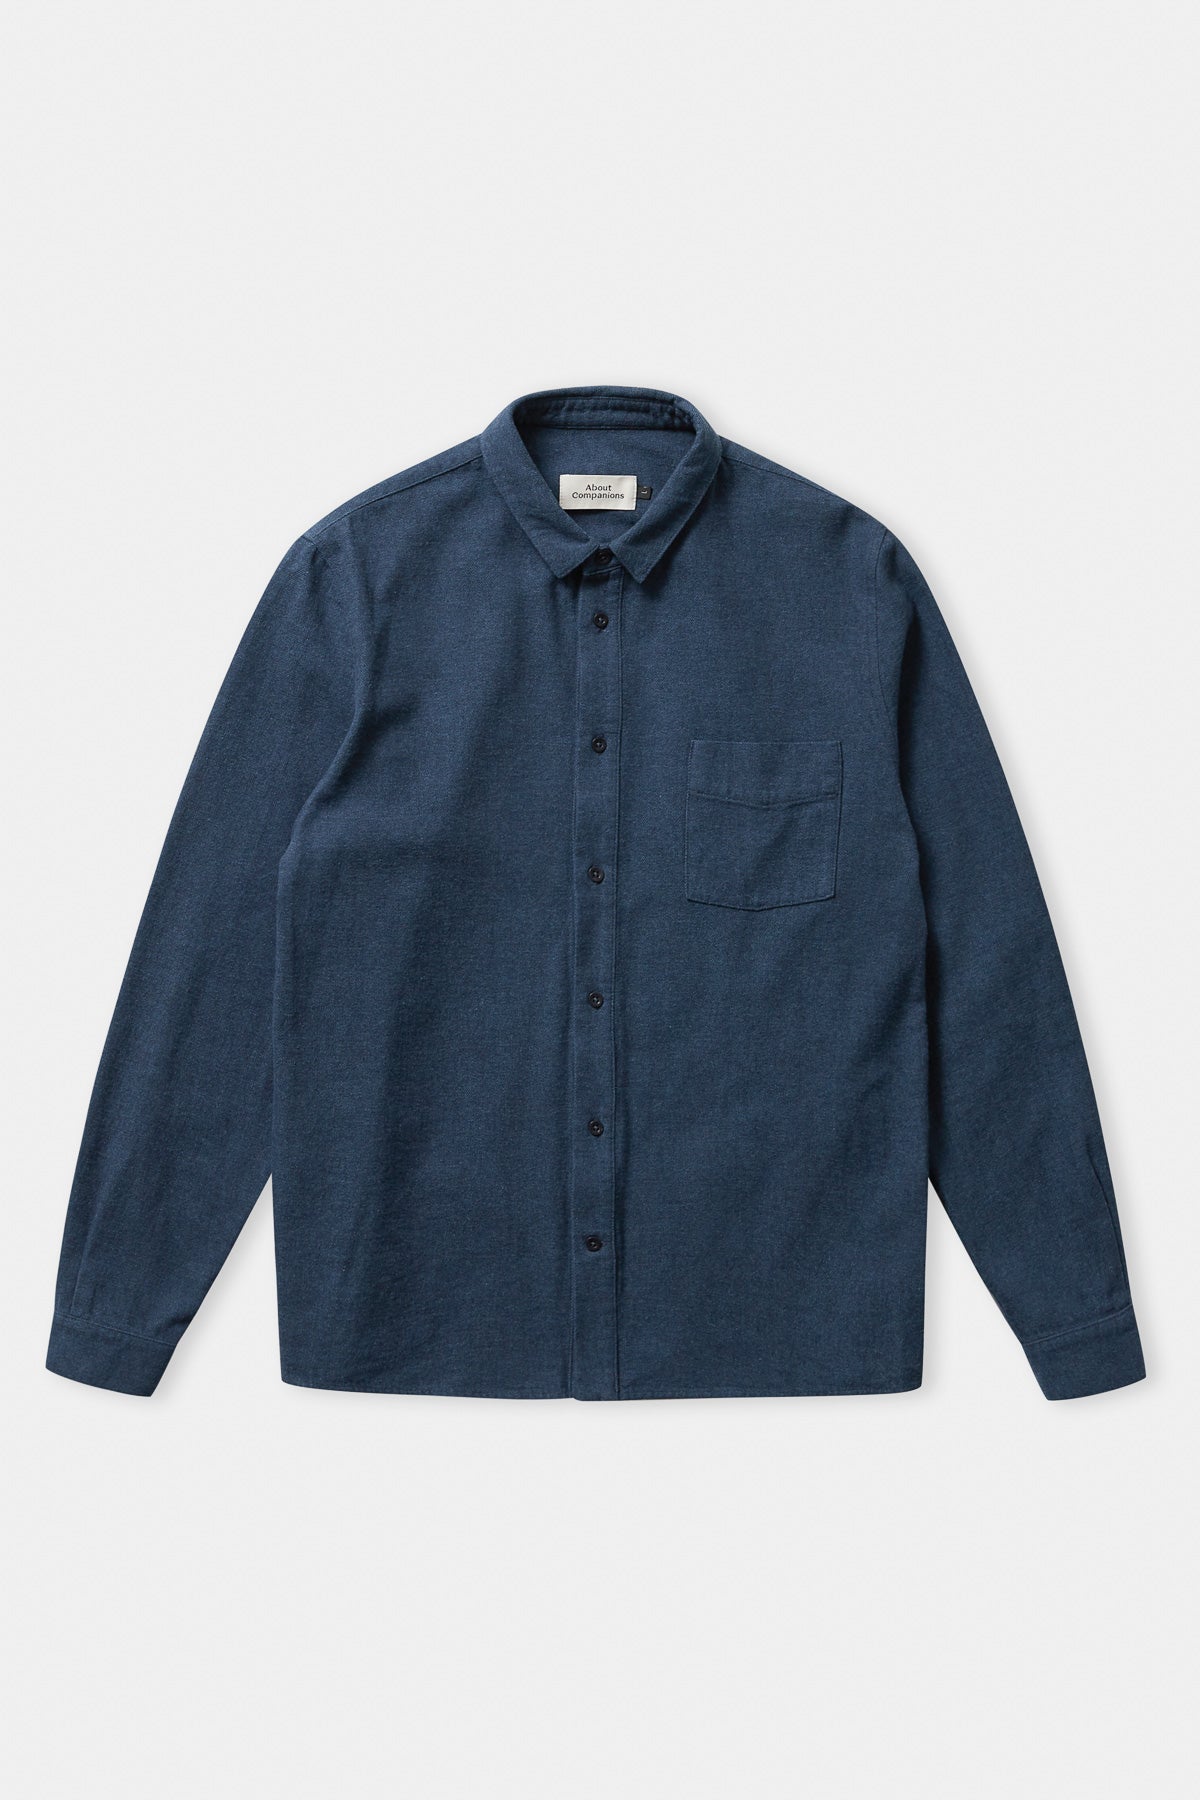 SIMON shirt eco ocean blue flannel